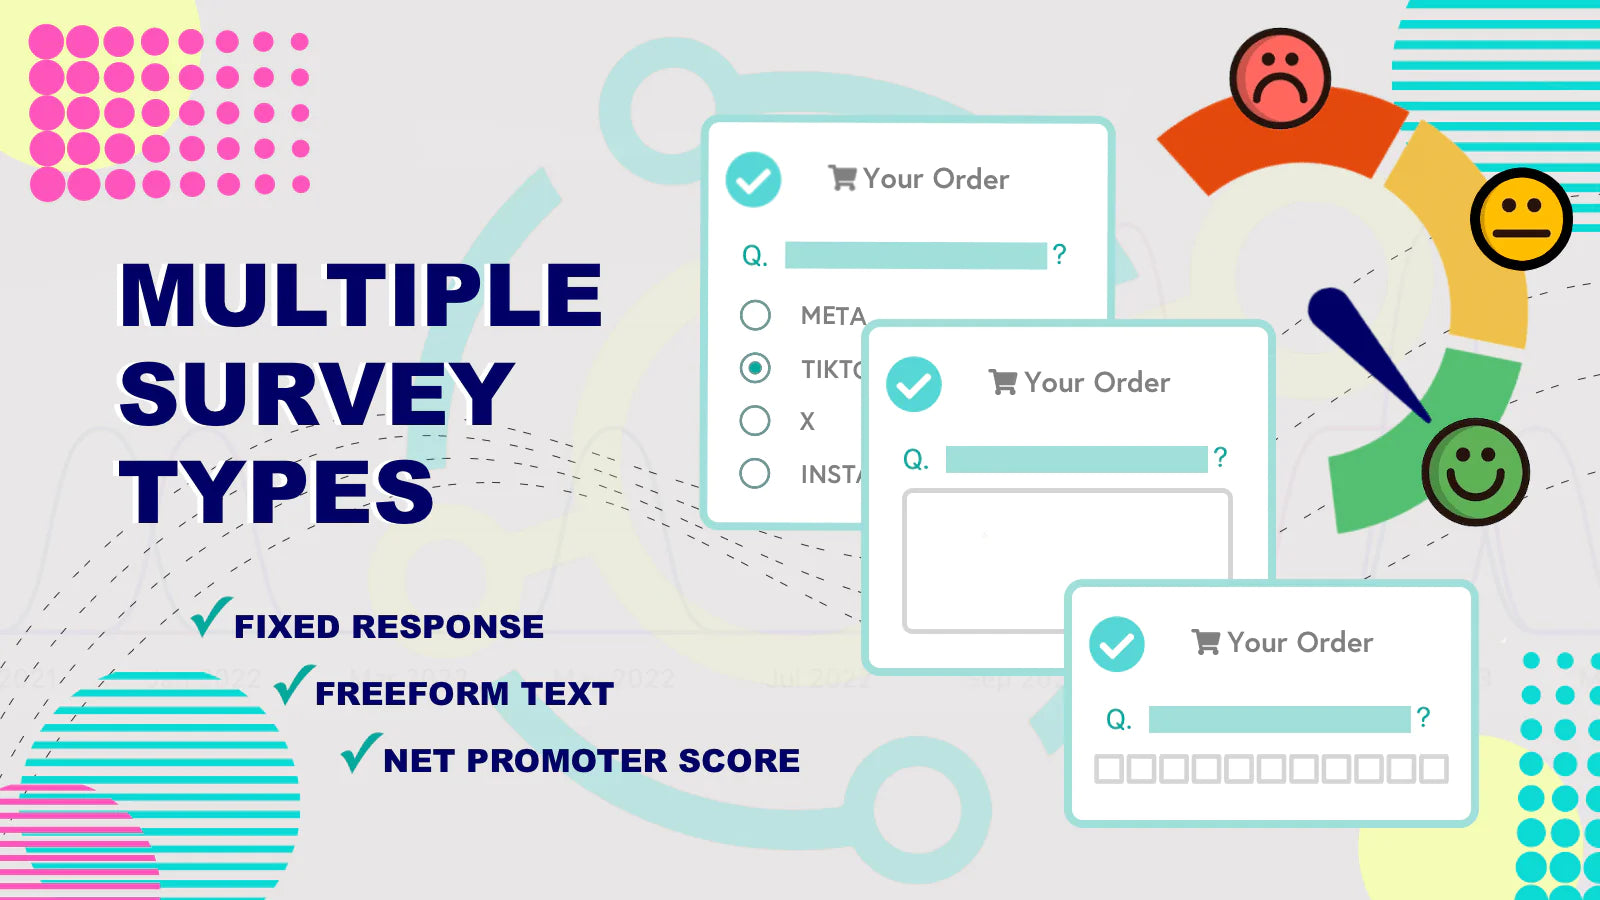  fixed response freeform text Net Promoter Score (NPS) 